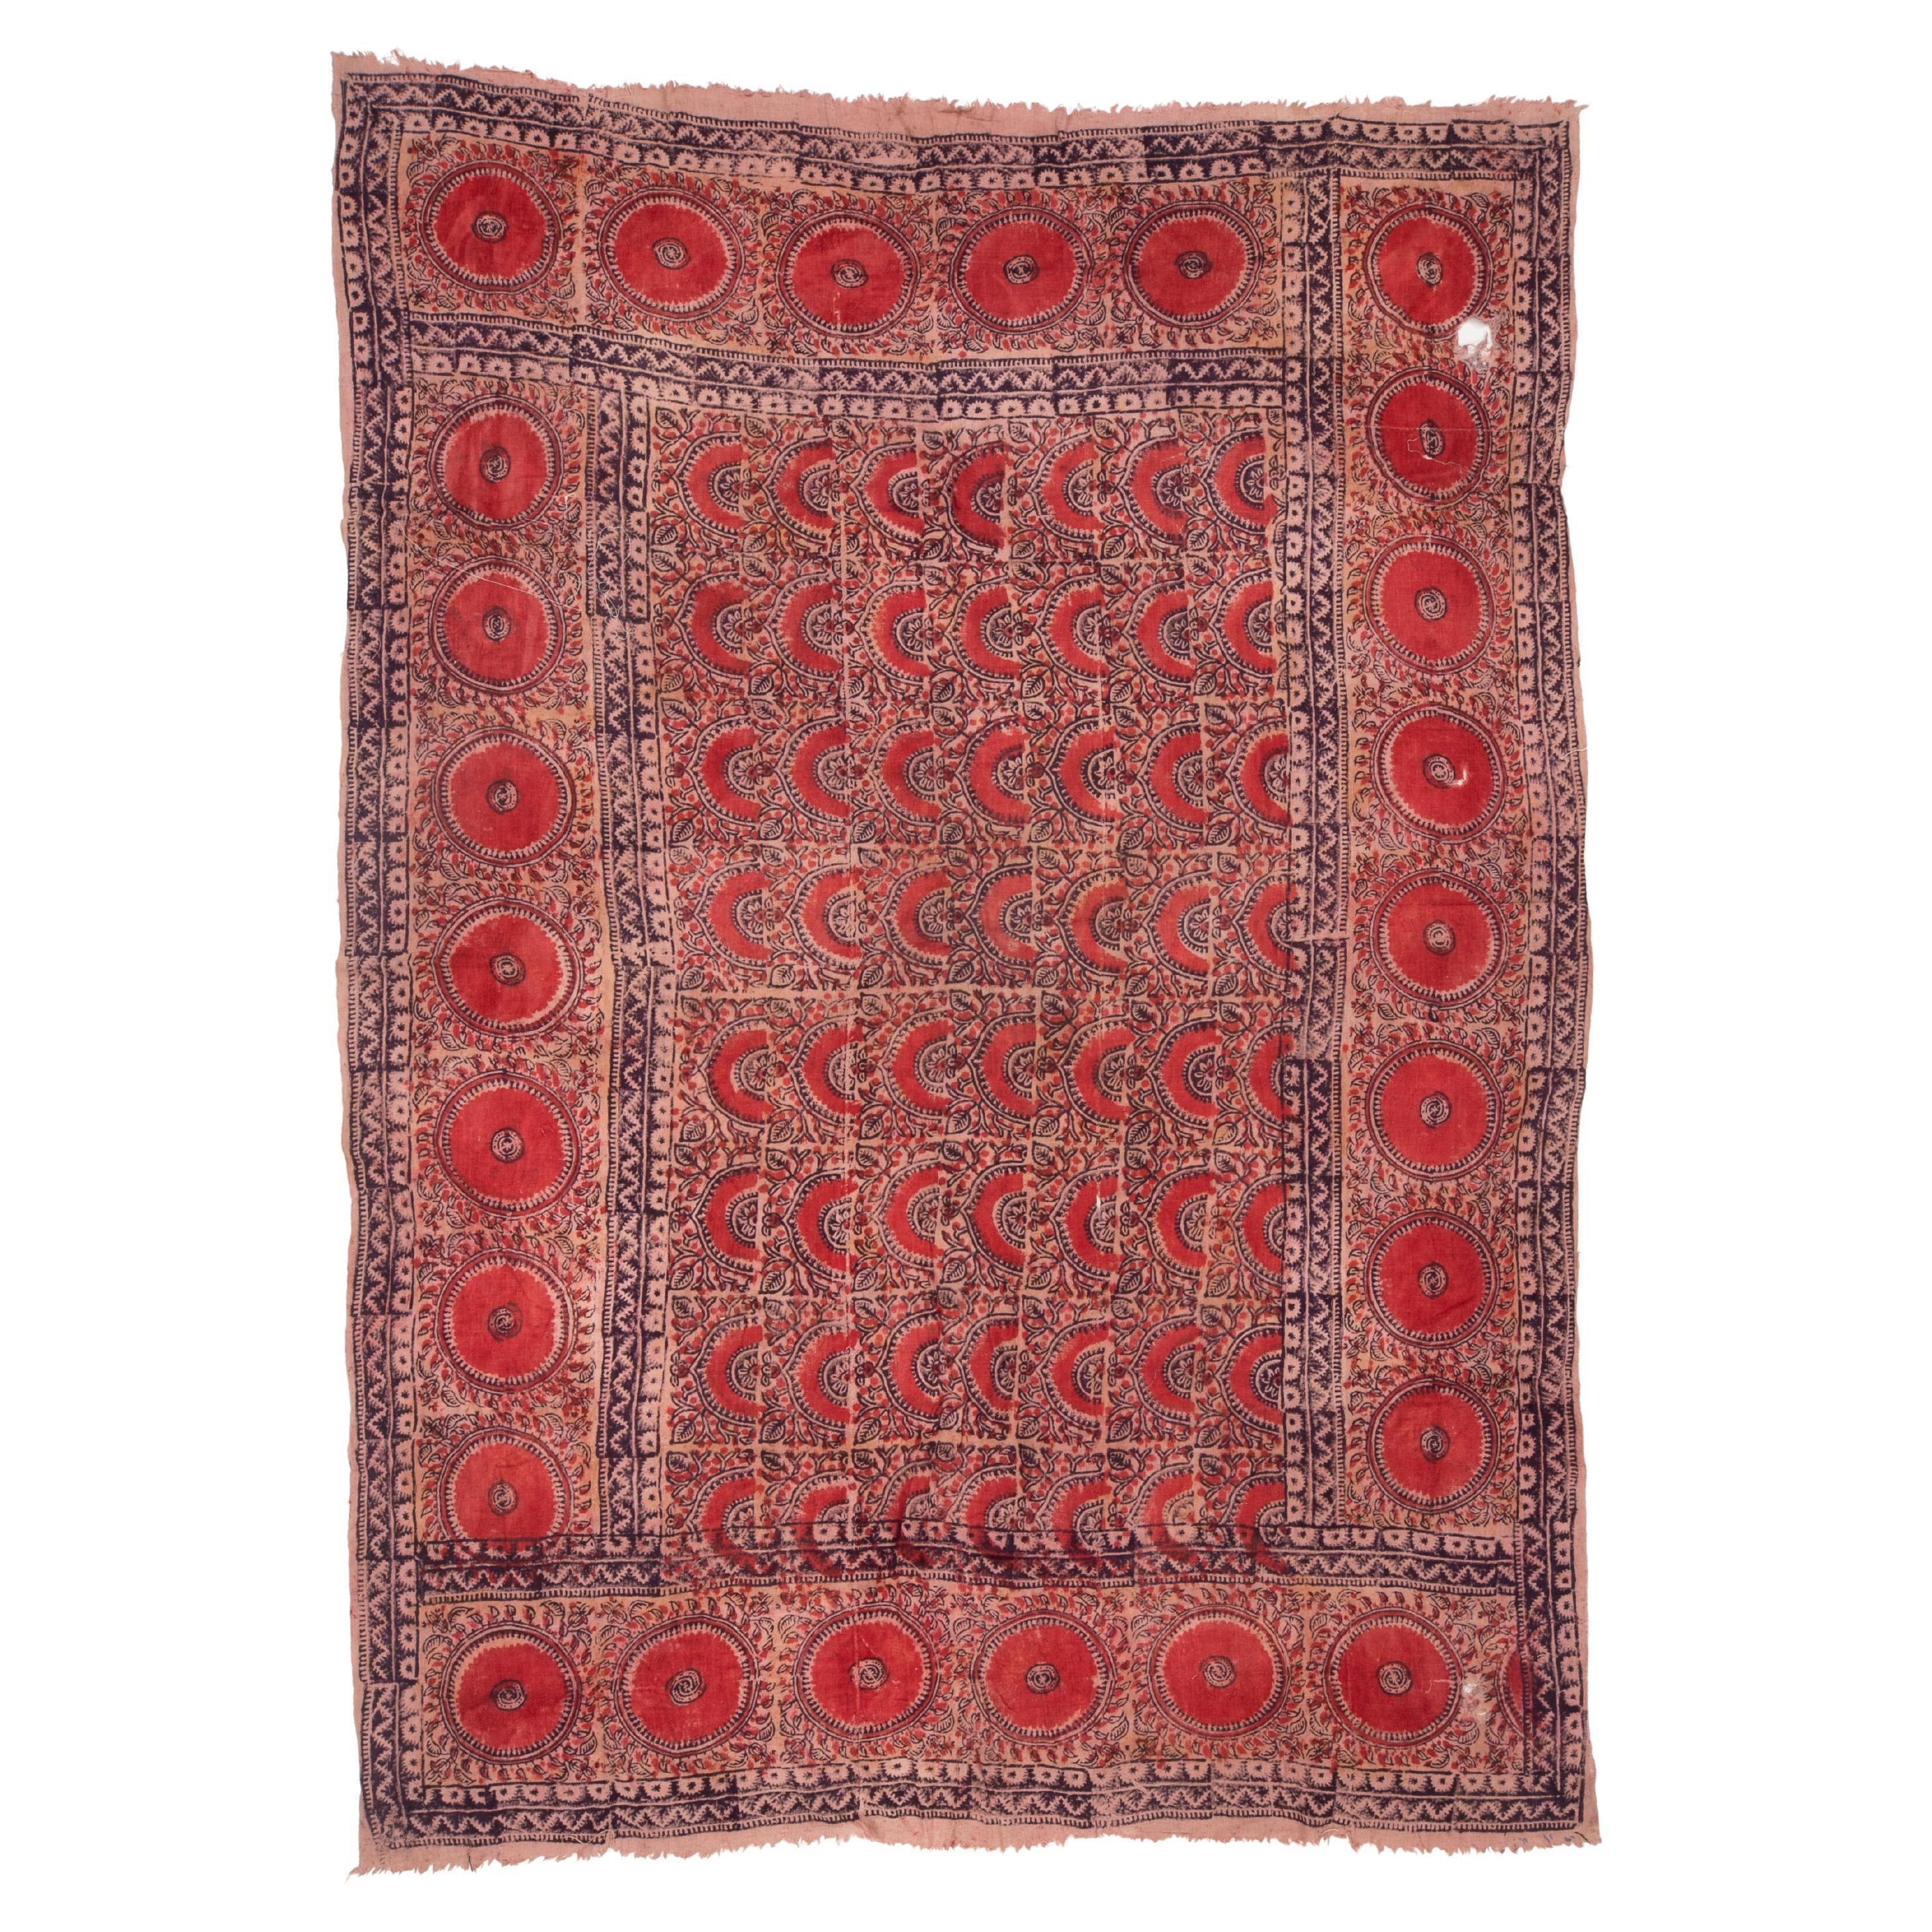 Antique Block Printed Quilt Top, Uzbekistan, Early 20th C.